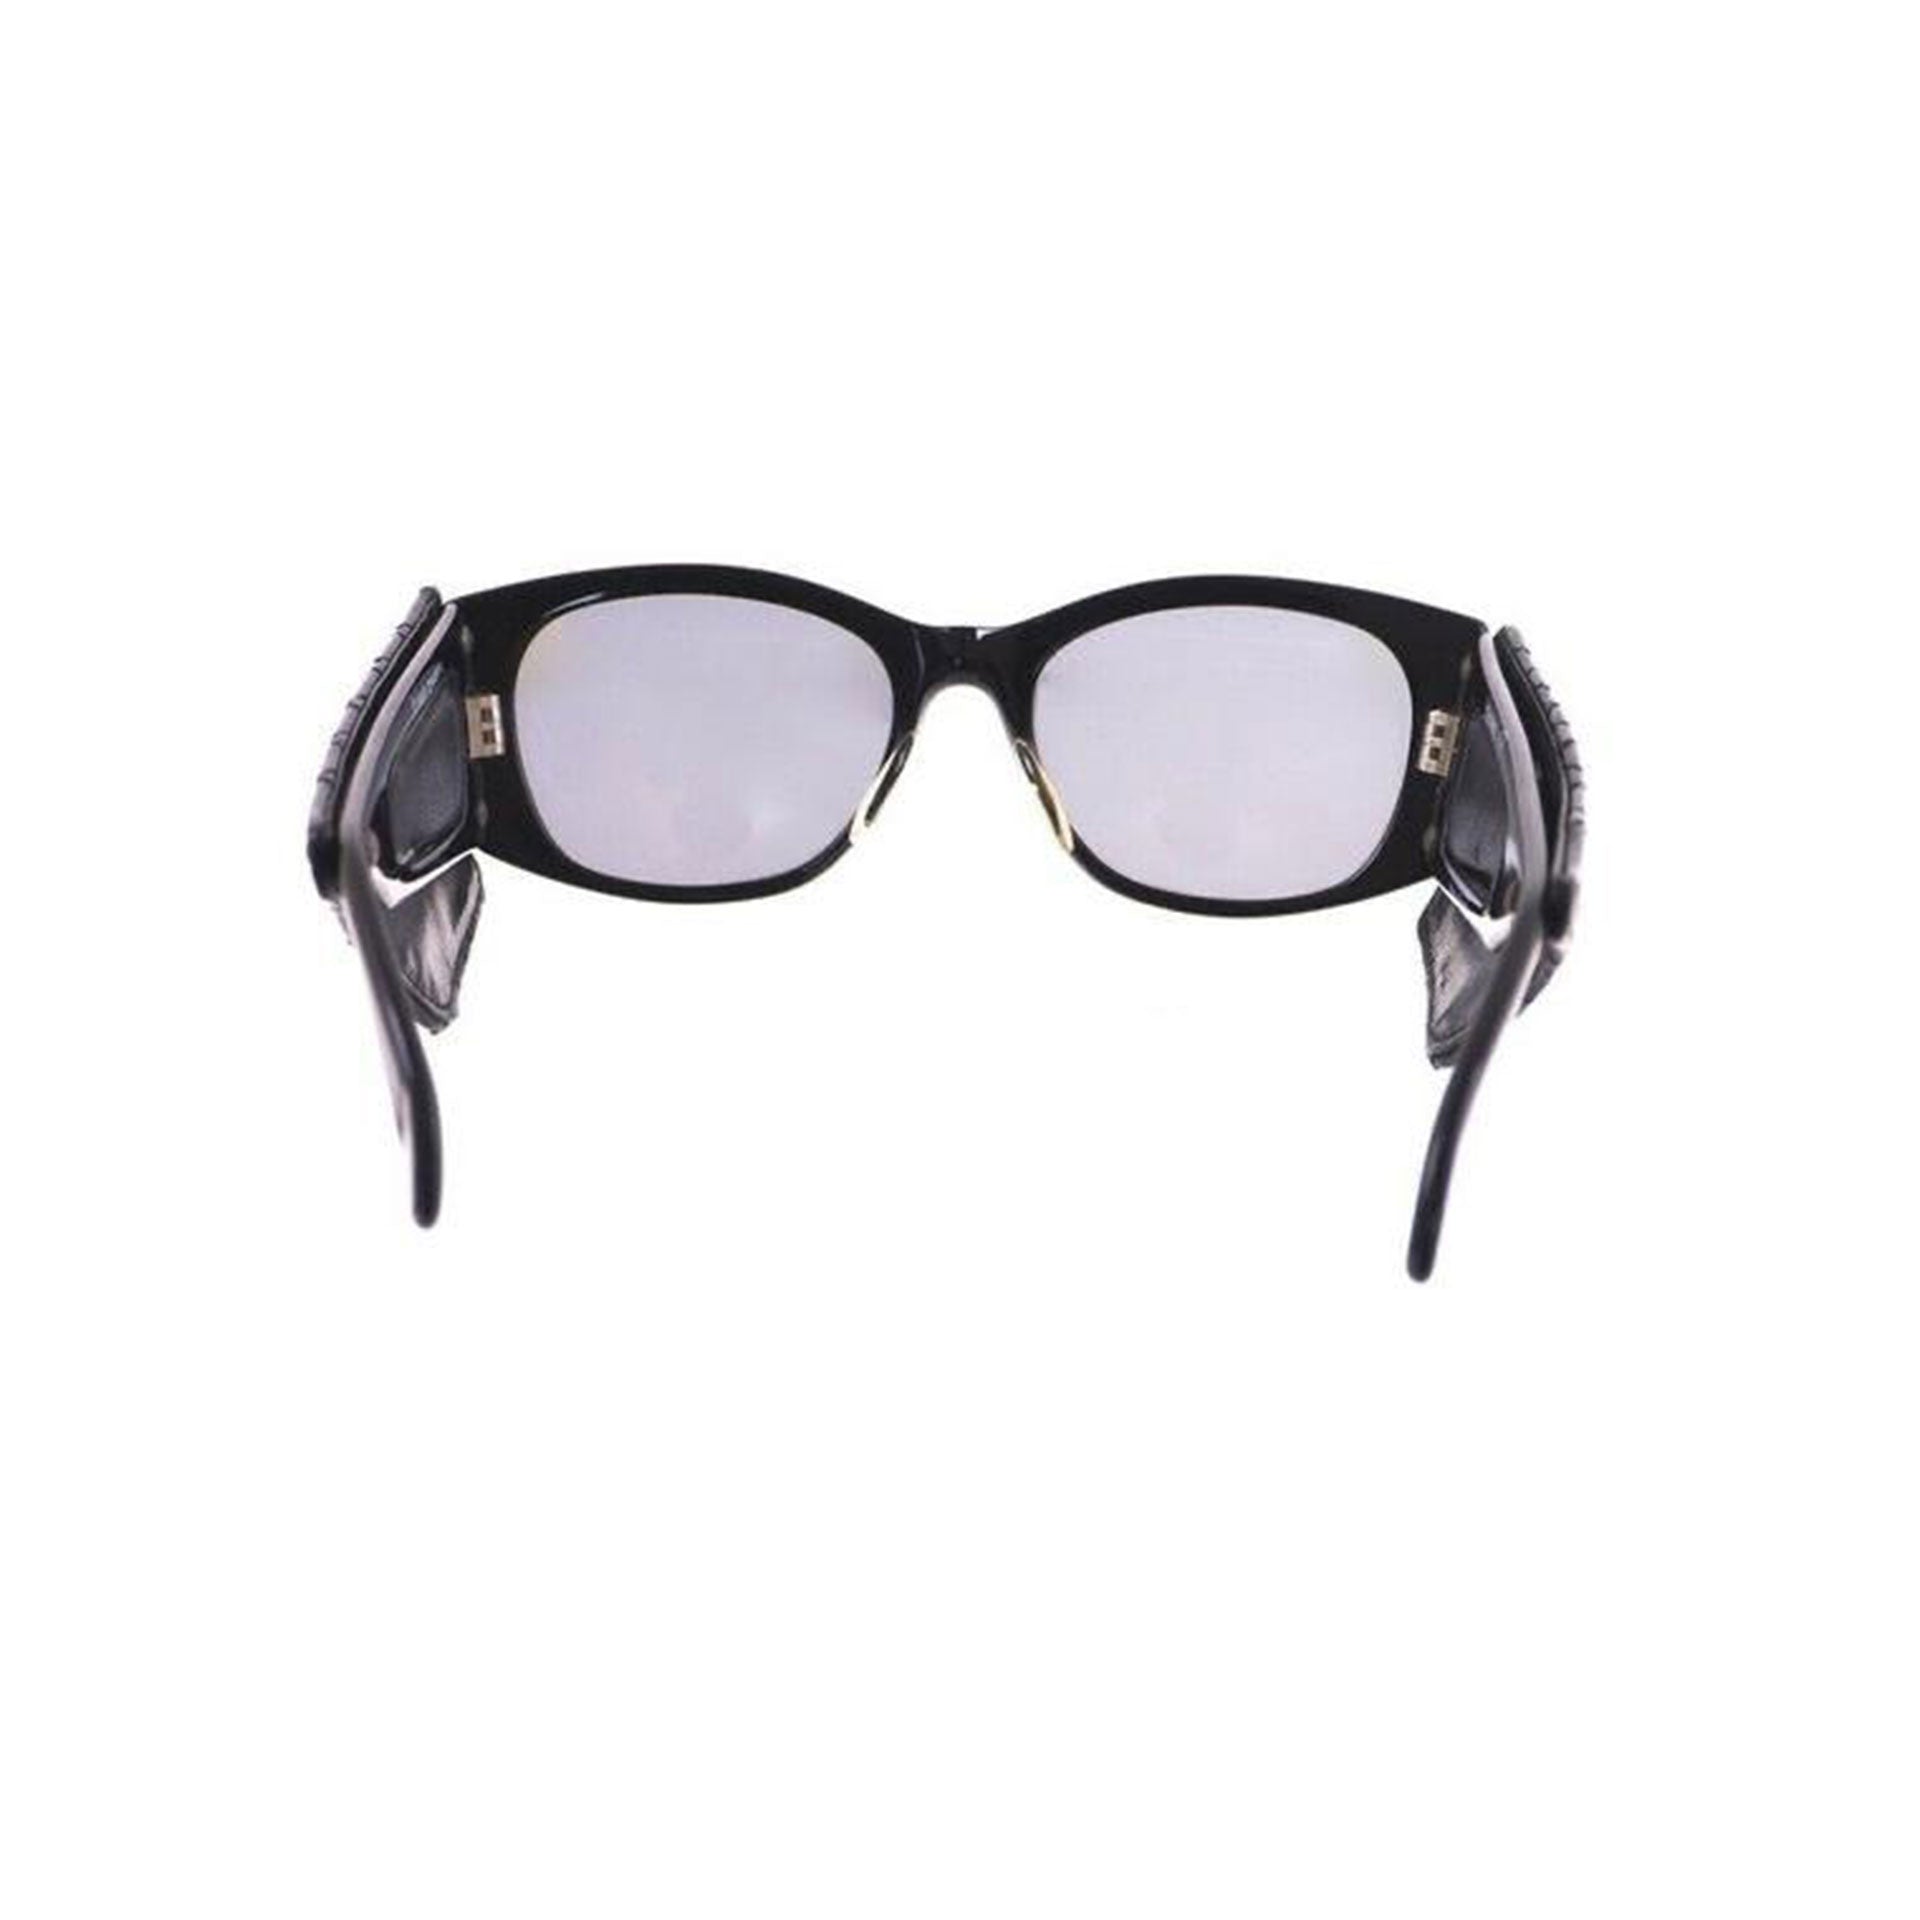 Chanel 1988 Vintage Aviator Pilot Sunglasses